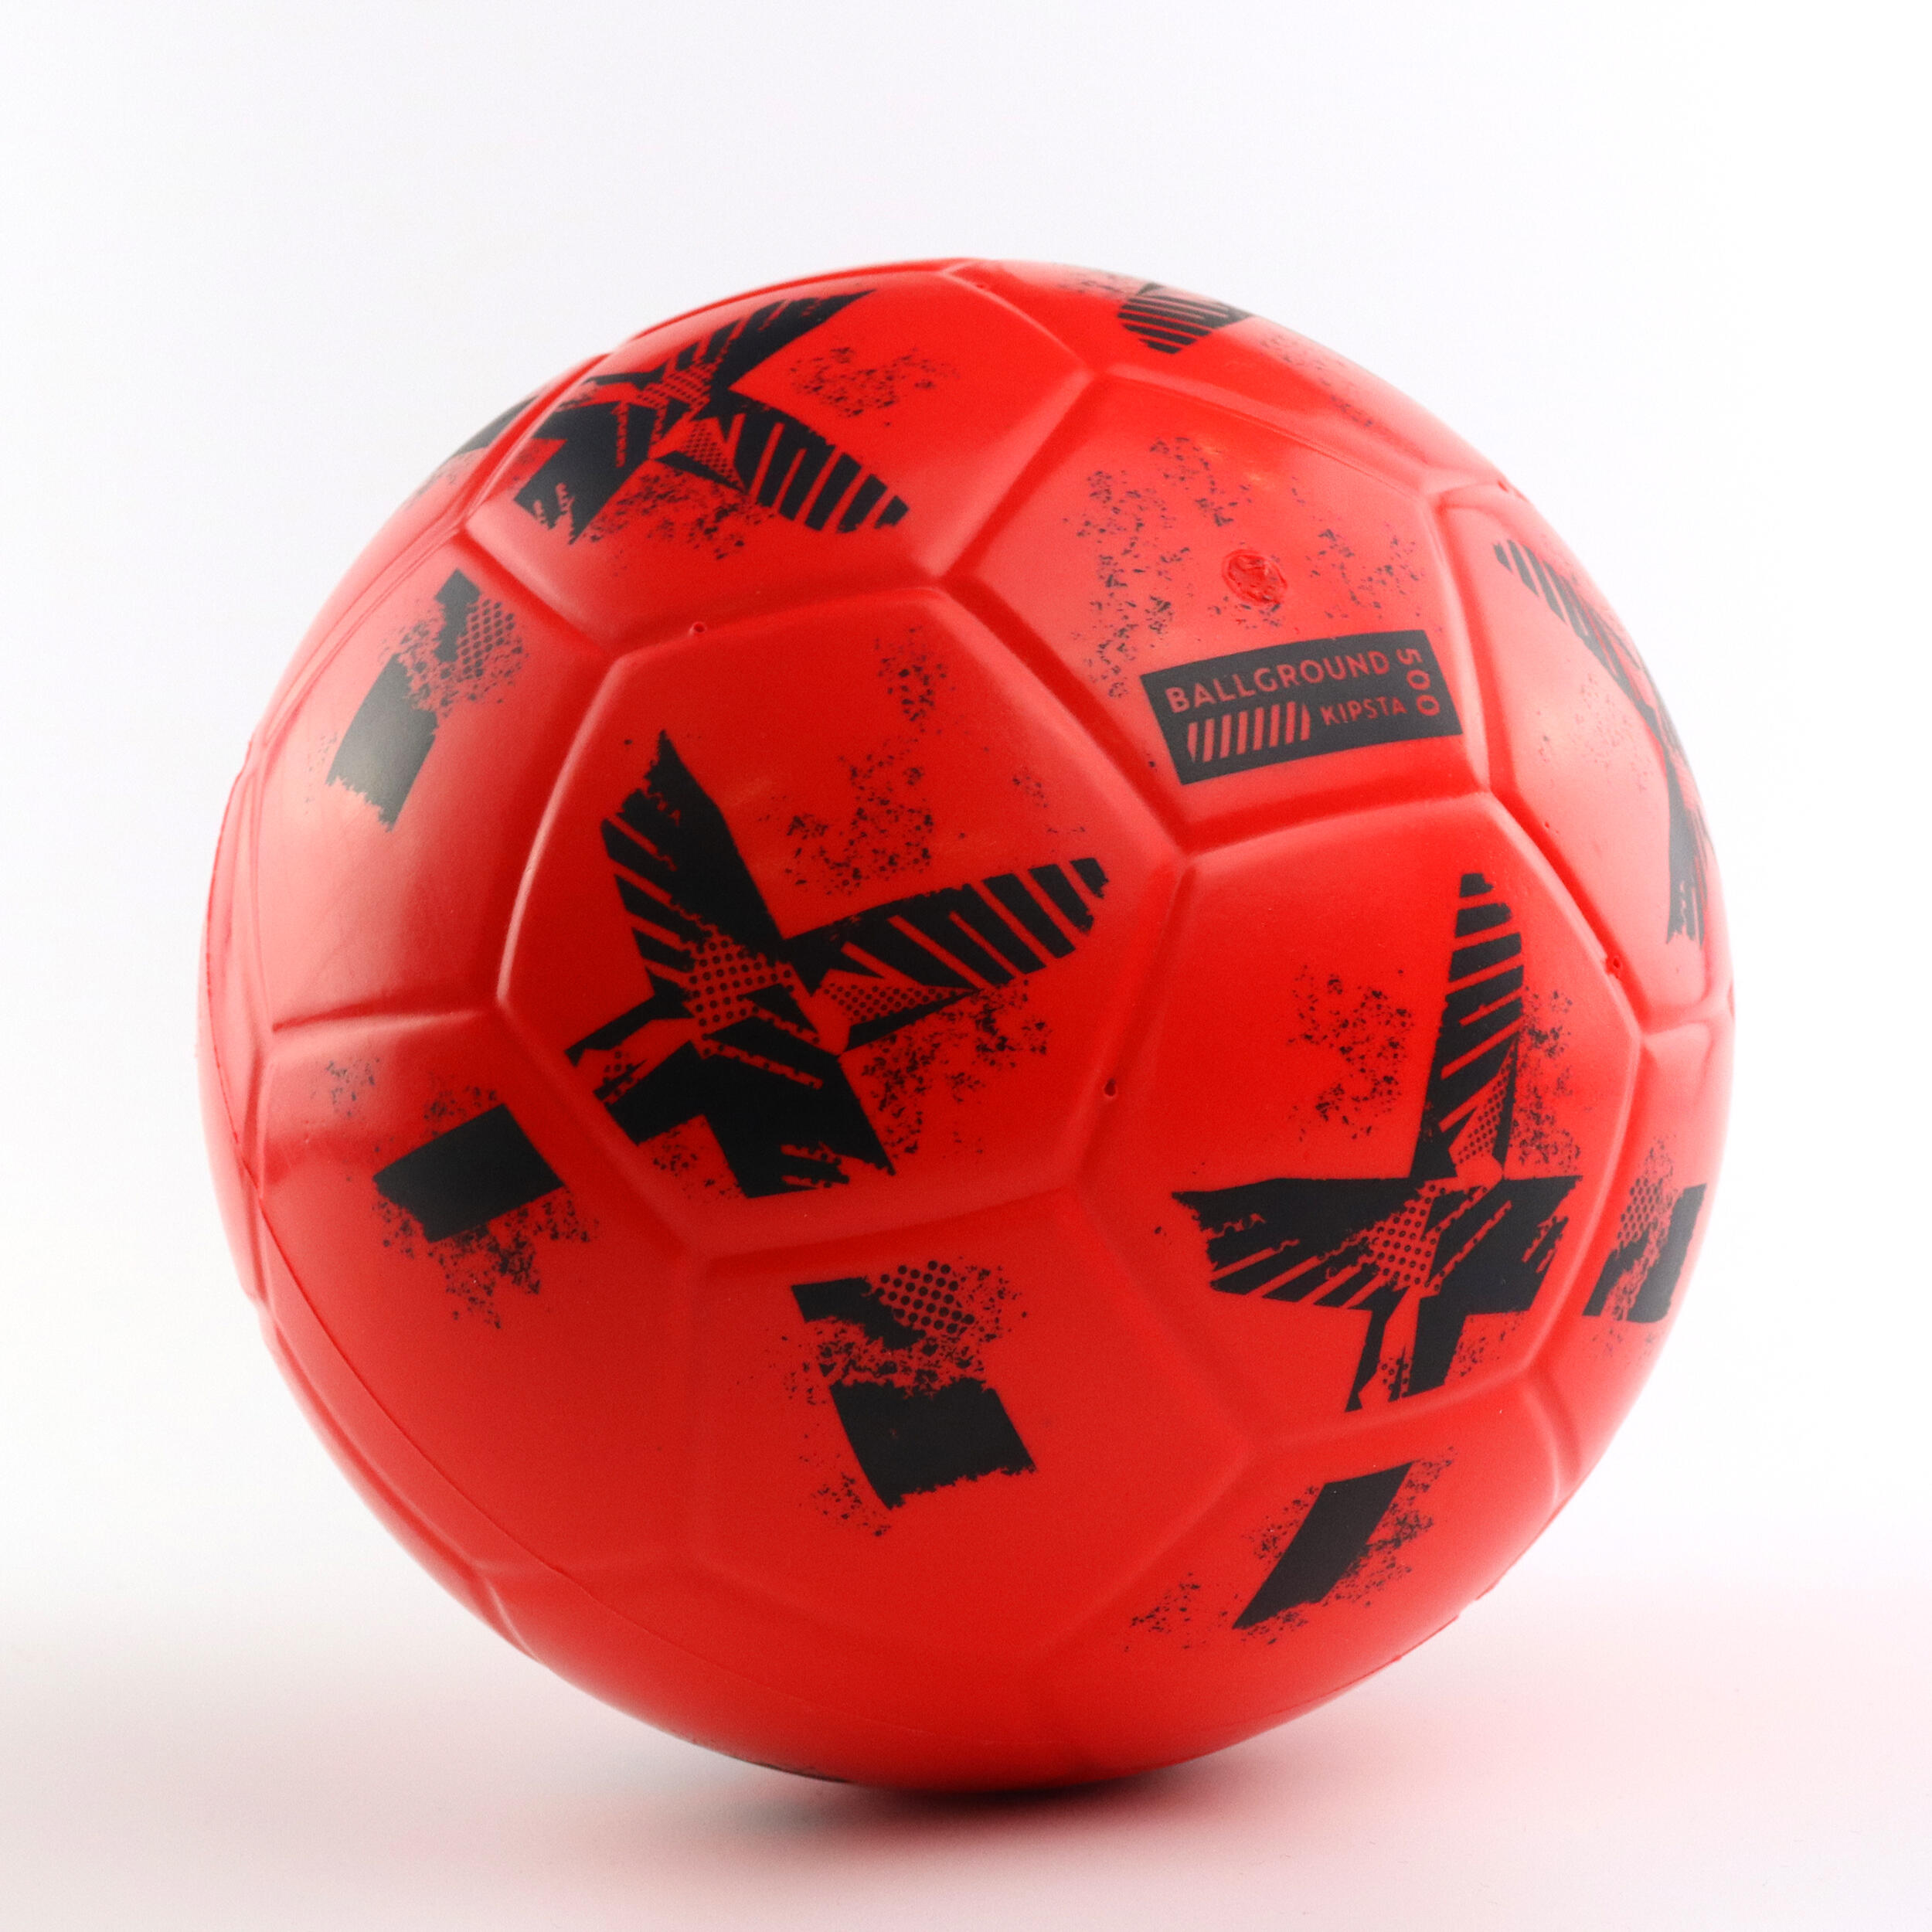 Foam Football S4 Ballground 500 - Red/Black 3/6